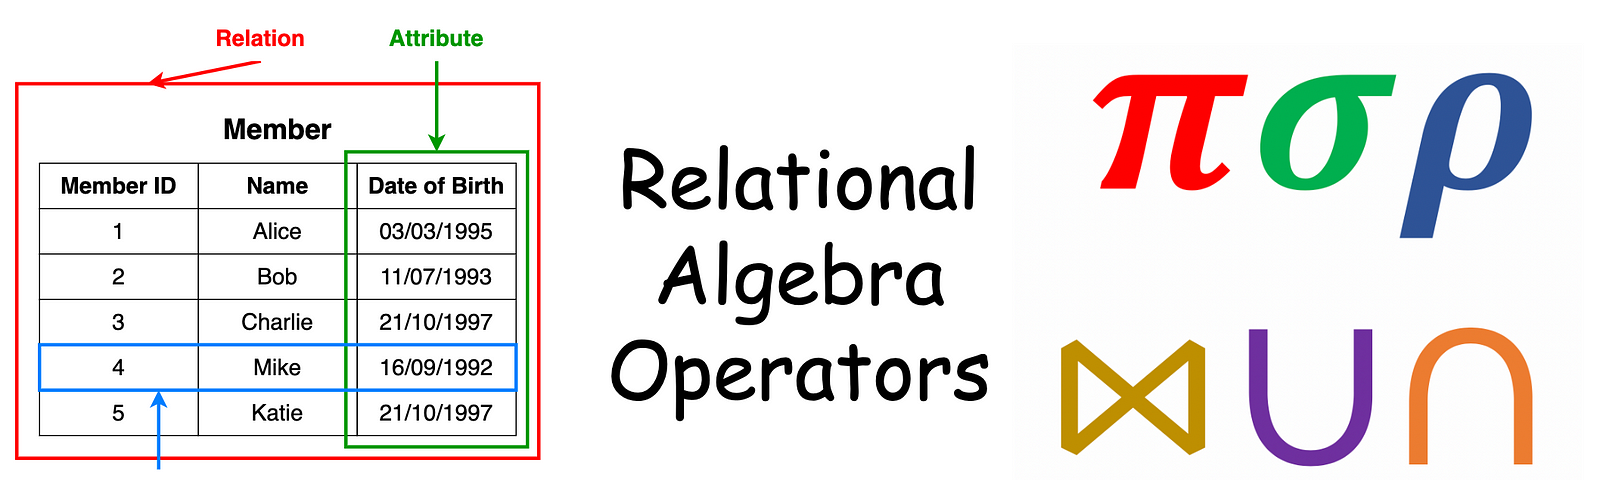 assignment operator relational algebra